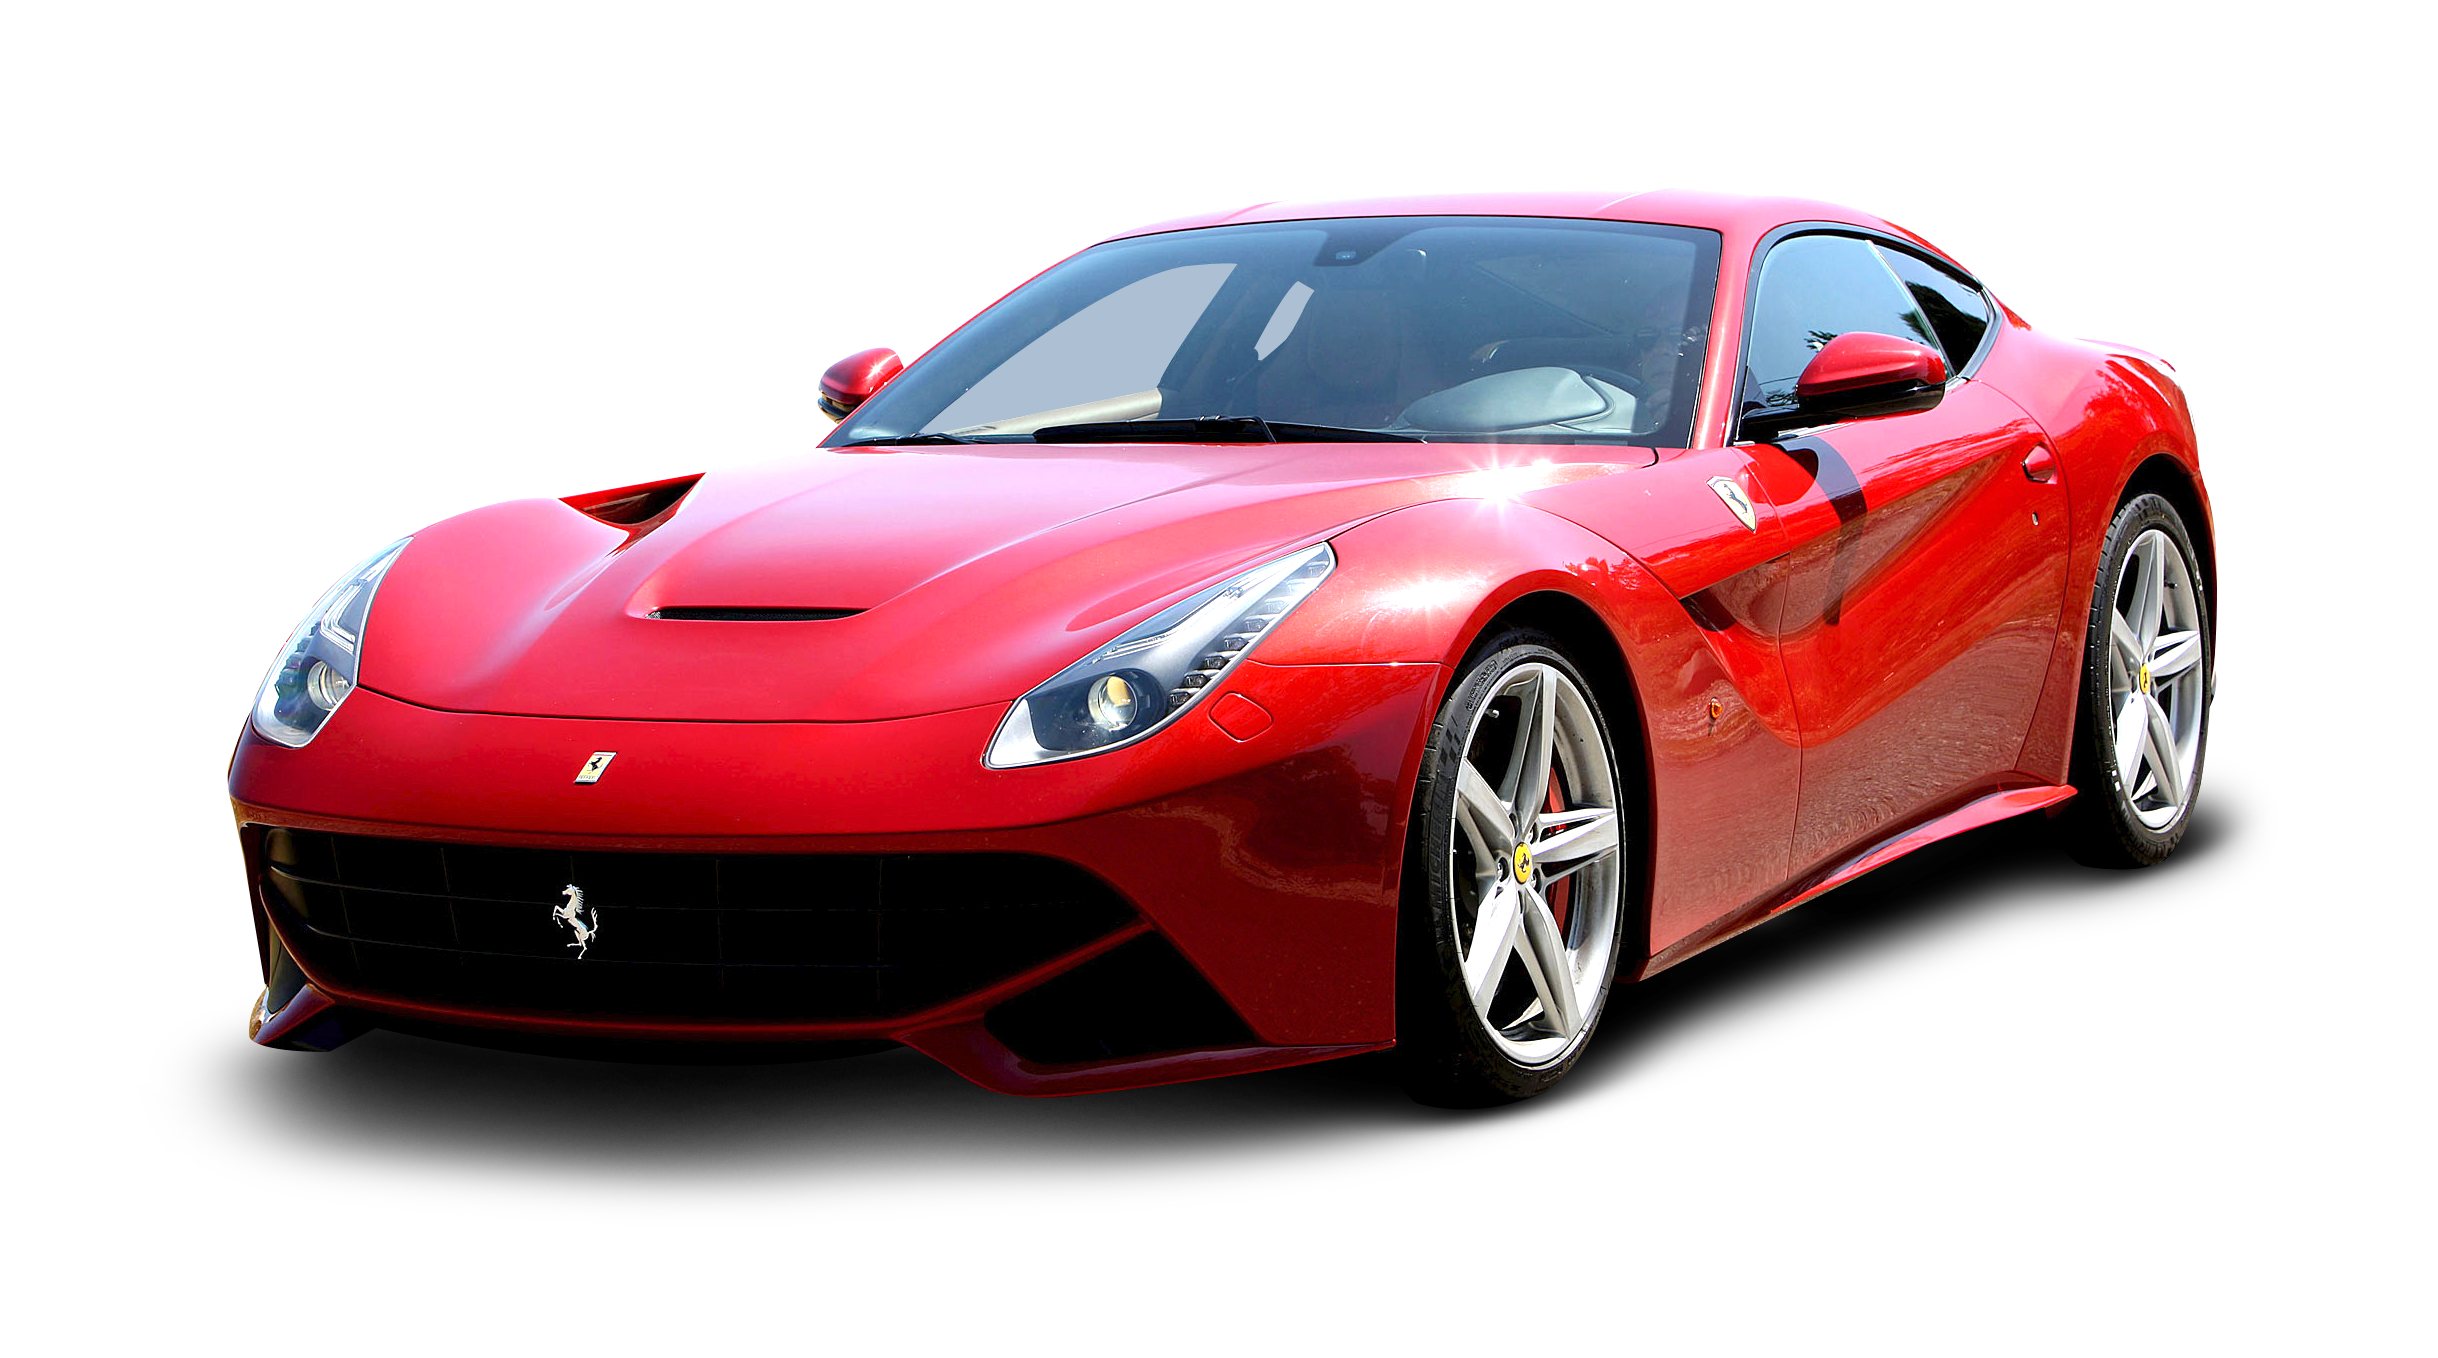 Red Ferrari F12 Berlinetta Car PNG Image